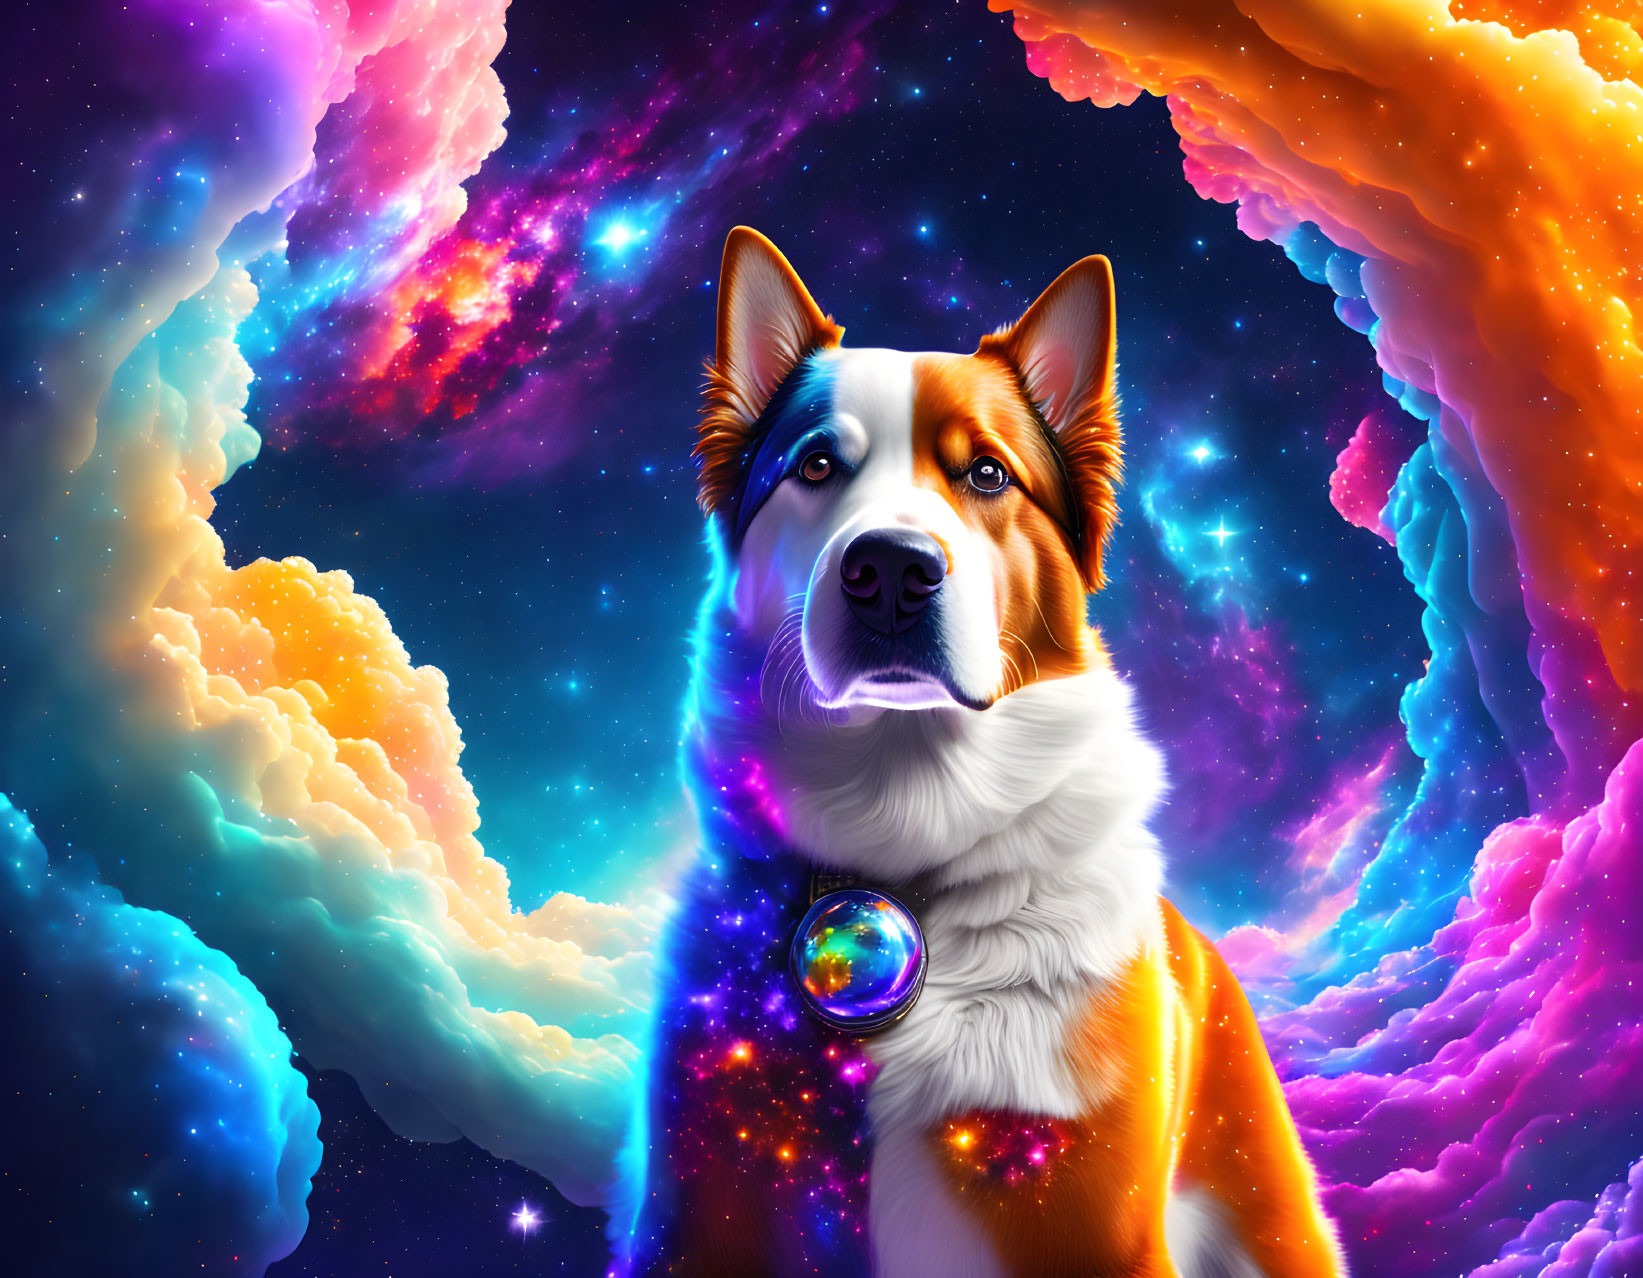 Vibrant Digital Artwork: Dog with Blue Eyes in Cosmic Setting